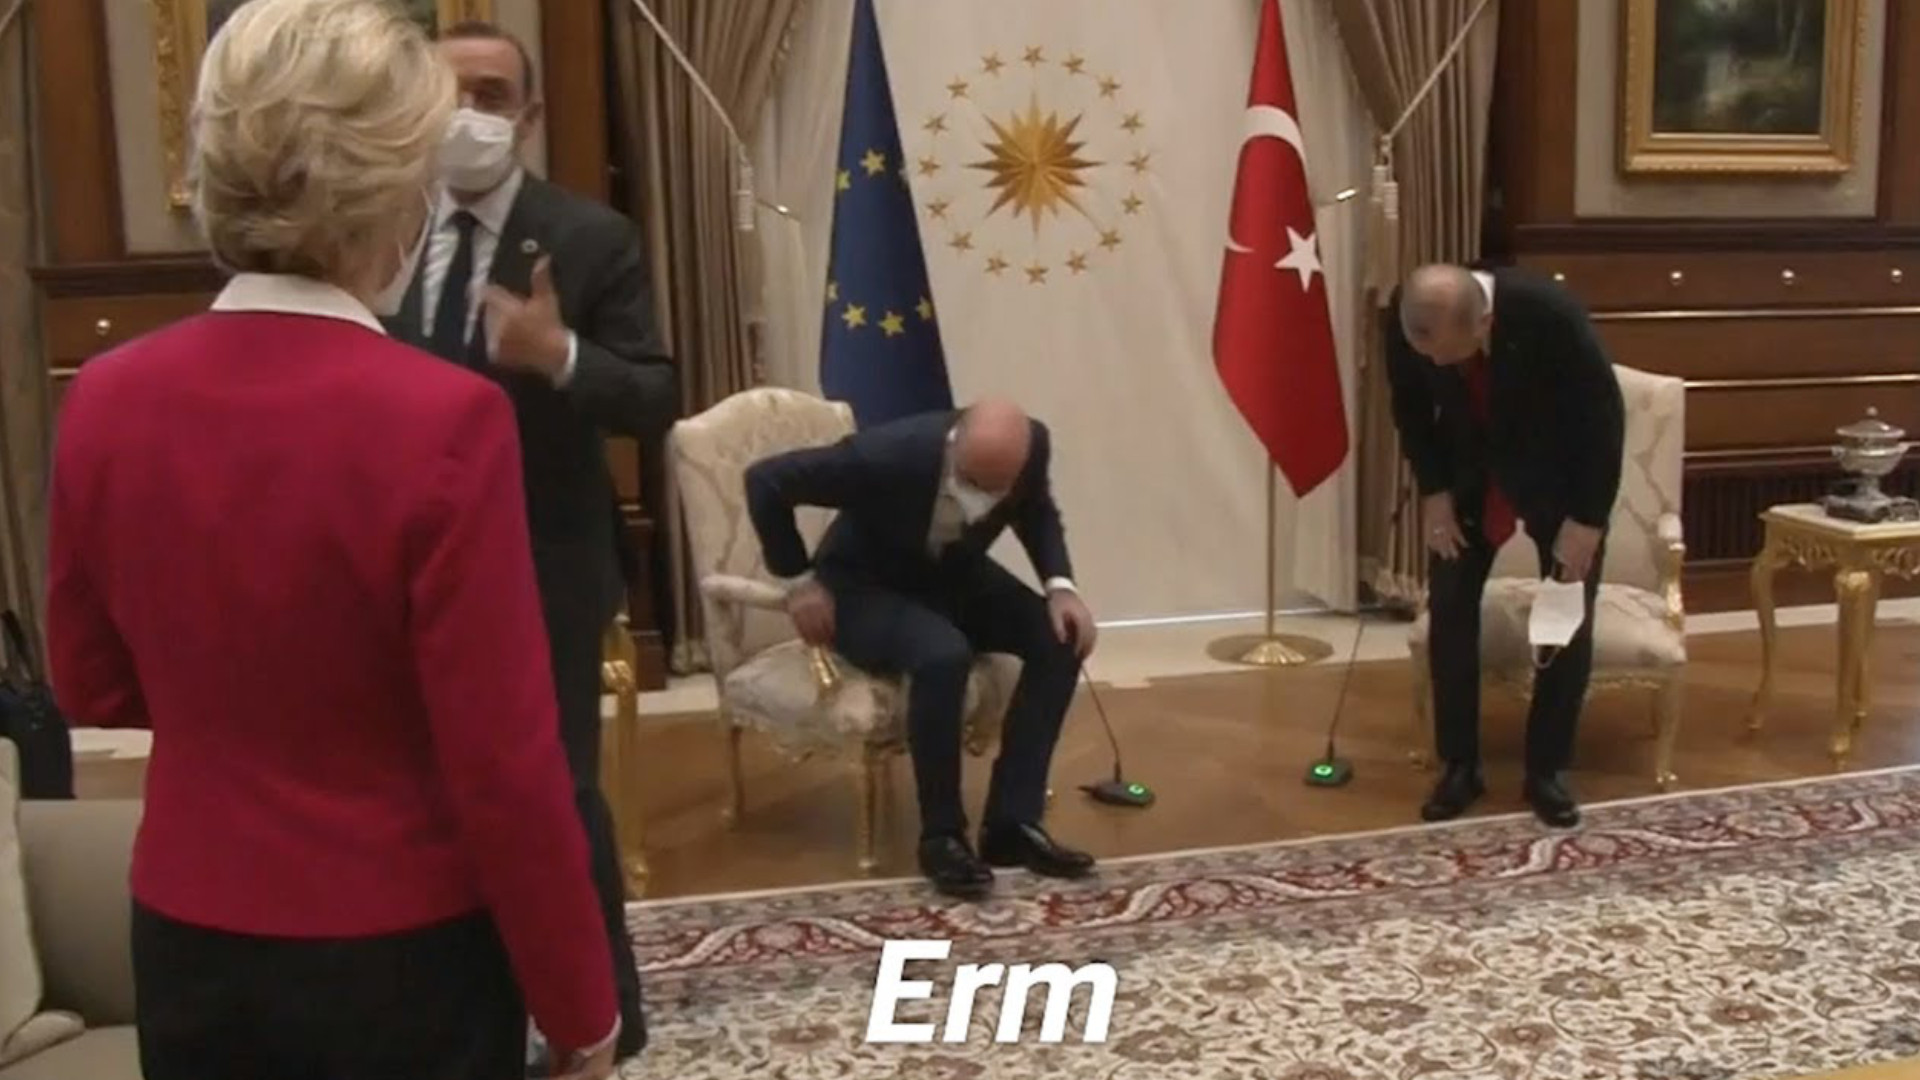 Unseated EU-Turkey relations